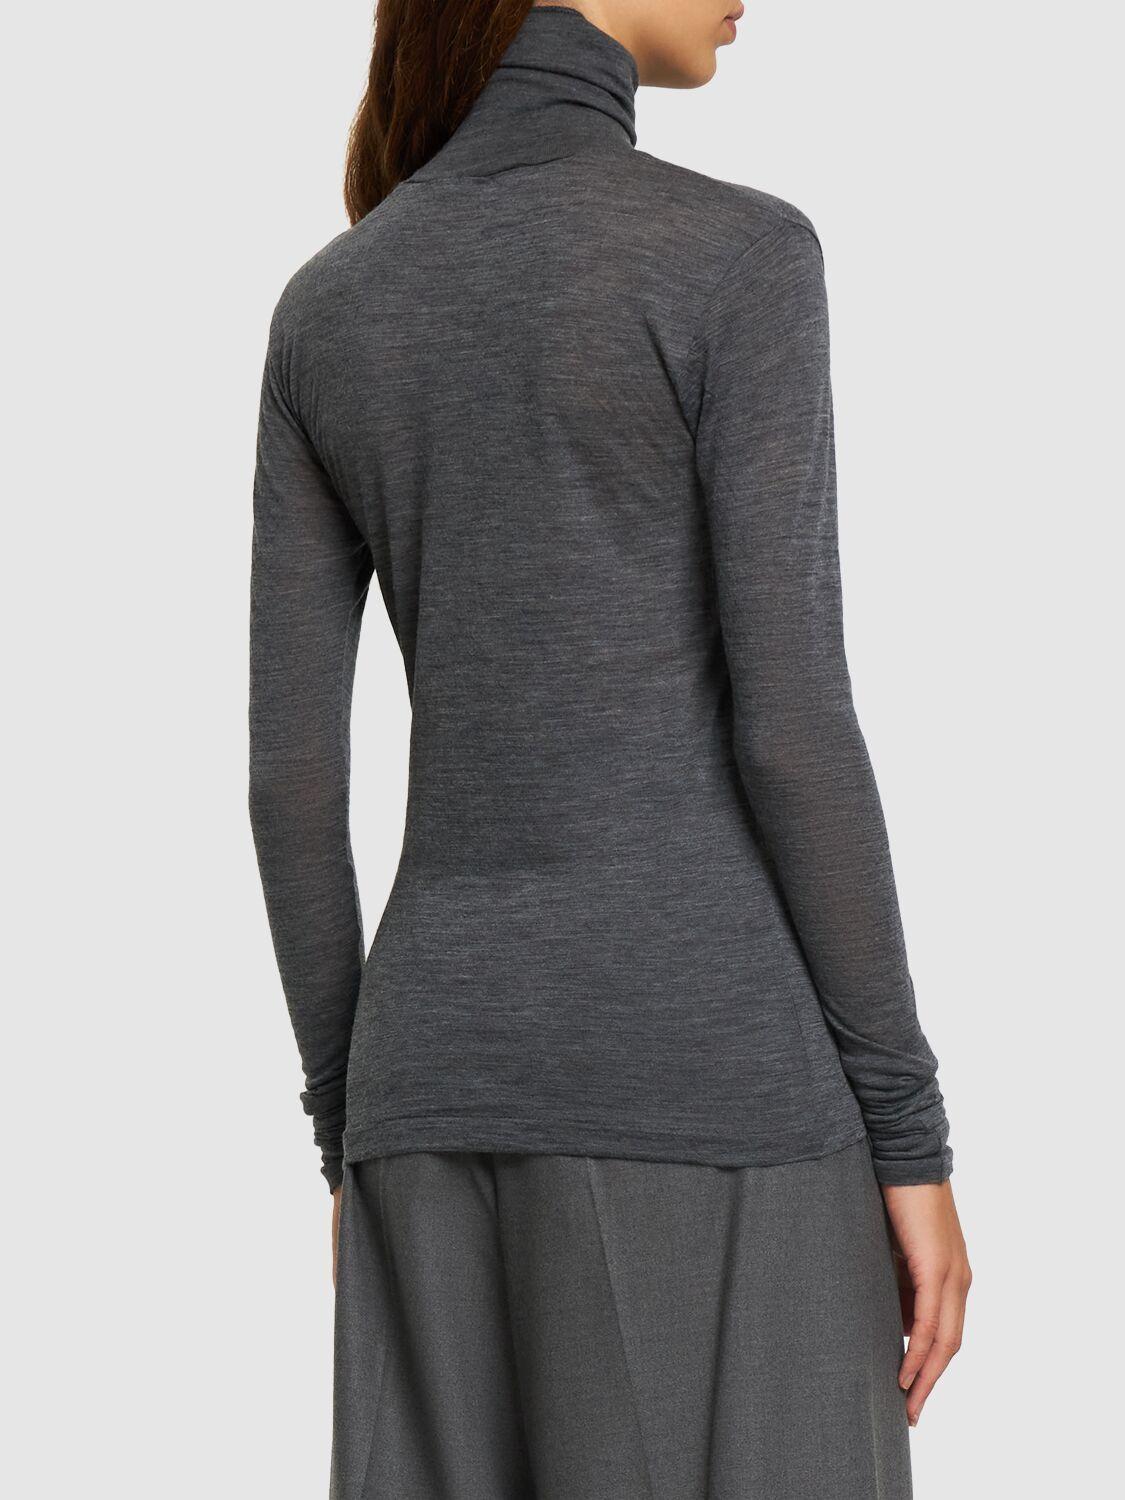 AURALEE Super Soft Sheer Wool Jersey Top in Gray | Lyst